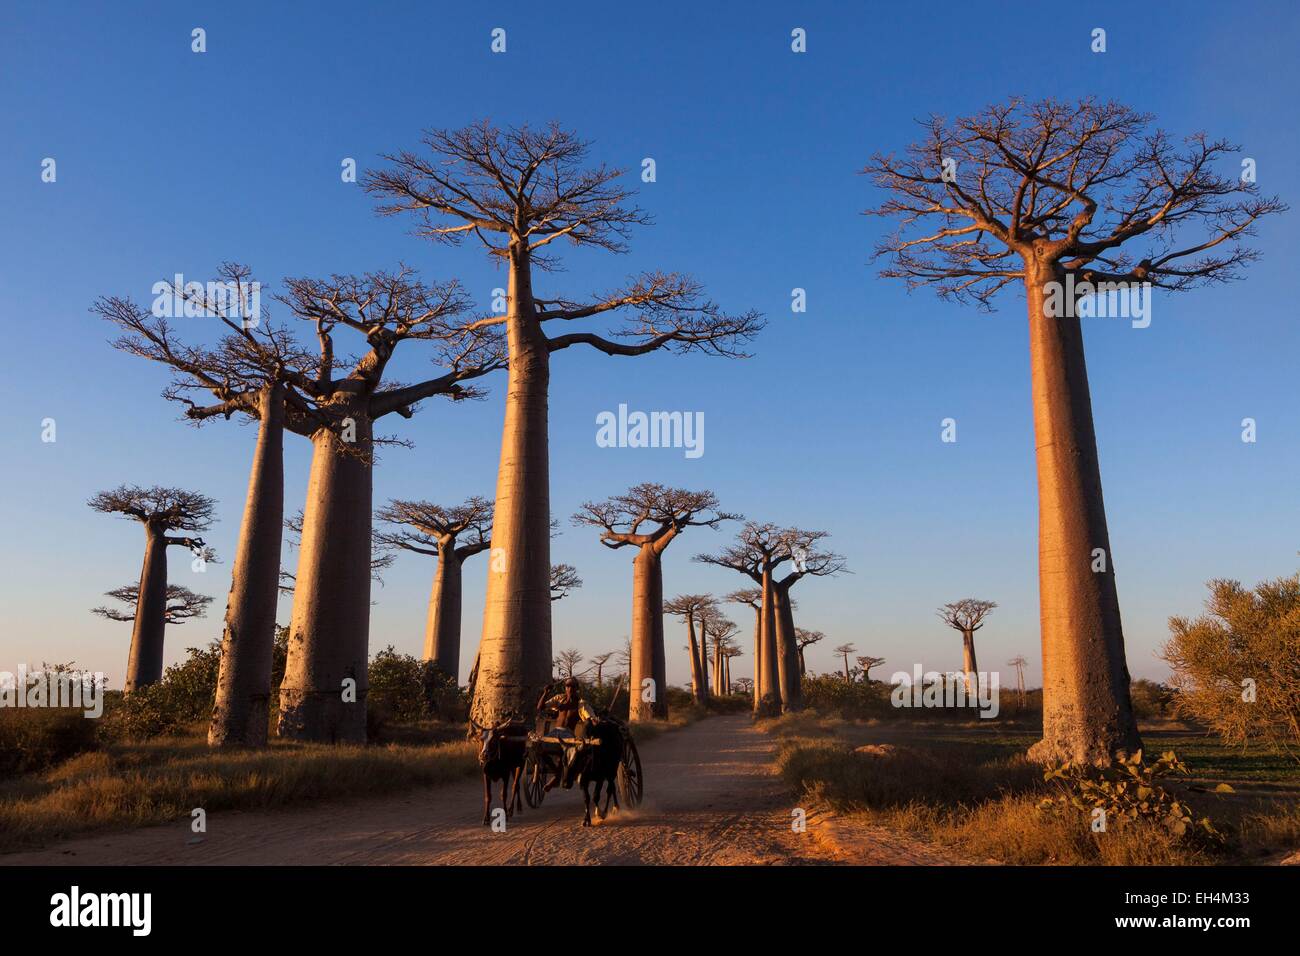 Madagaskar, Menabe Region, Morondava, Zebu Warenkorb in der Allee der Baobabs, Grandidiers Baobabs (Affenbrotbäume Grandidieri) Stockfoto